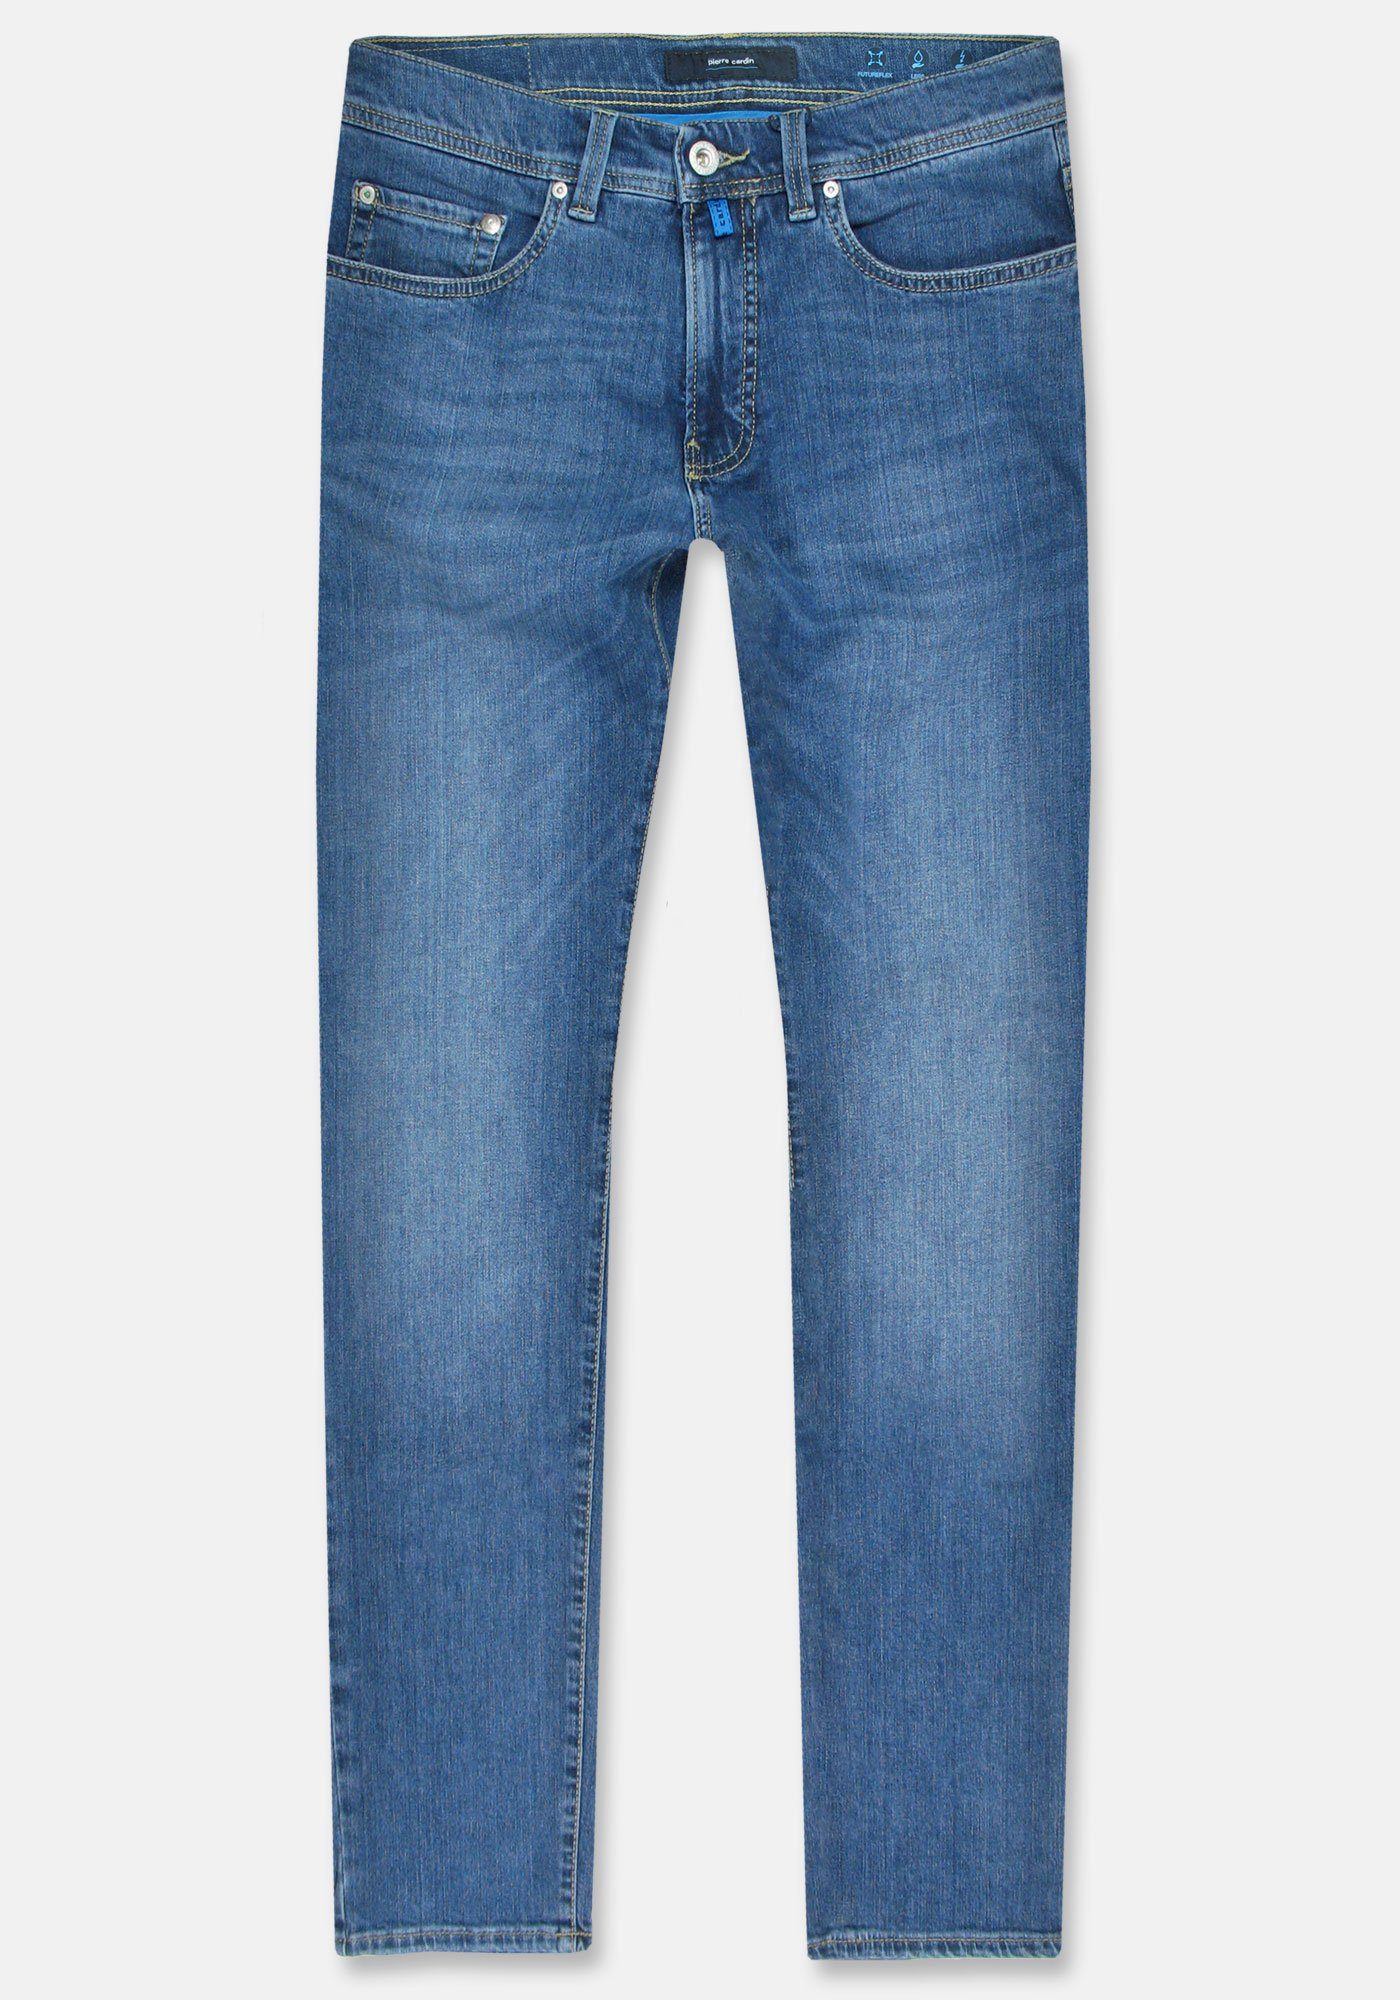 Pierre Cardin 5-Pocket-Jeans used Tapered summer blue Lyon authentic Futureflex